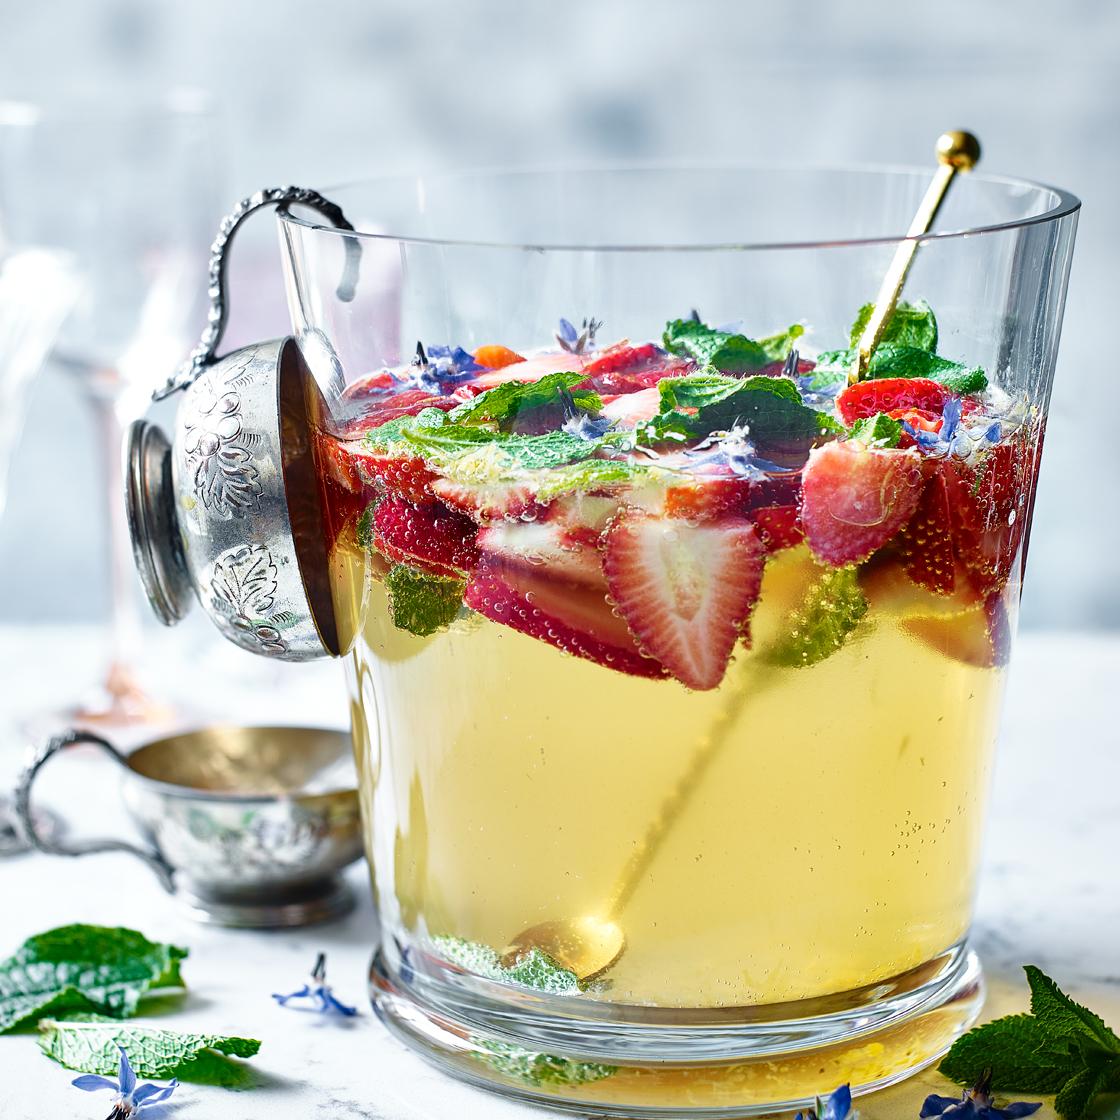 Image of Borage tea with strawberries